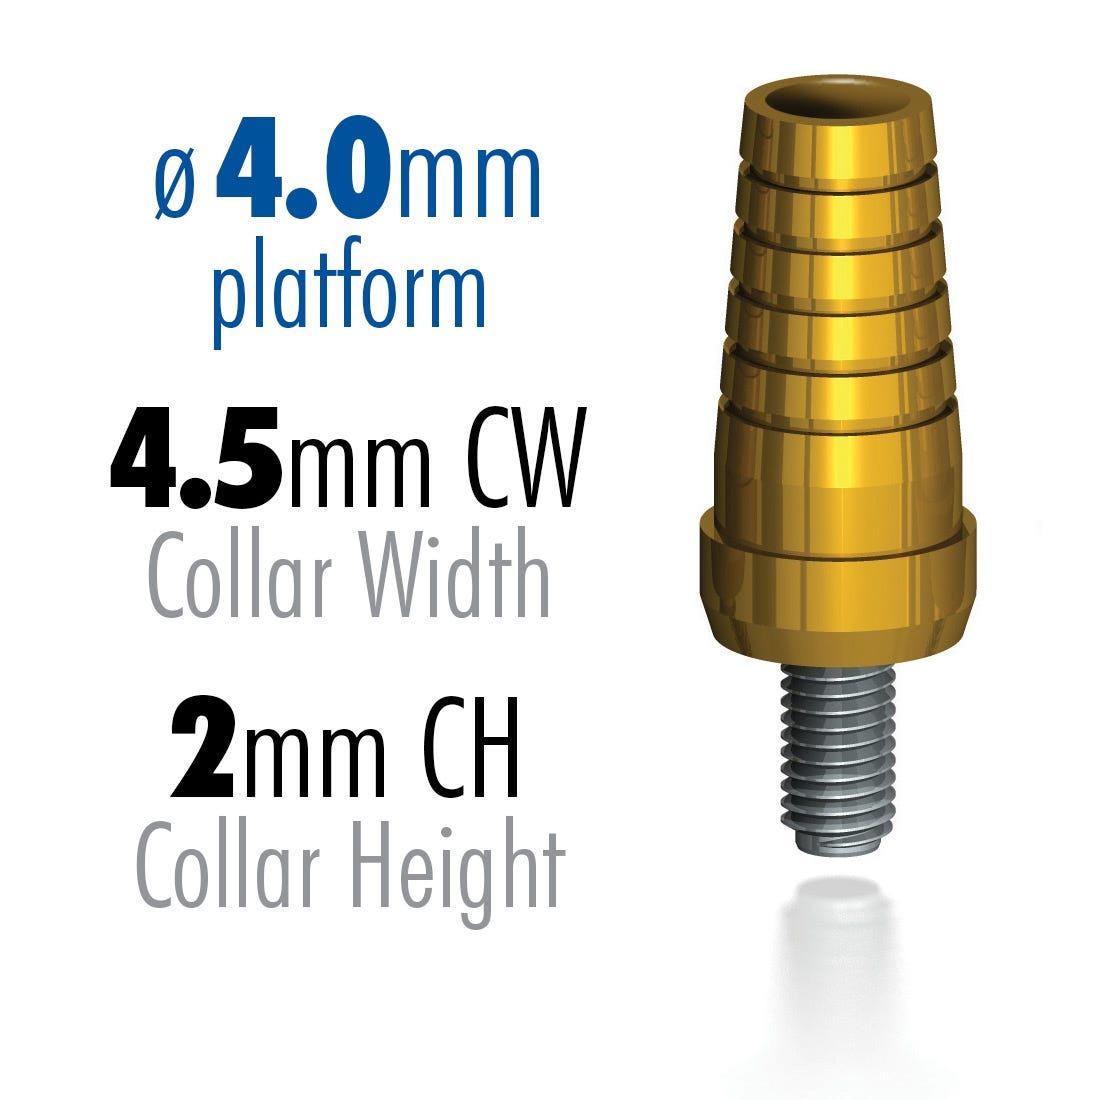 infinity X-hex Prepable Abutment, 4.0mm Platform, 4.5mm CW - 2mm CH - 2 Piece